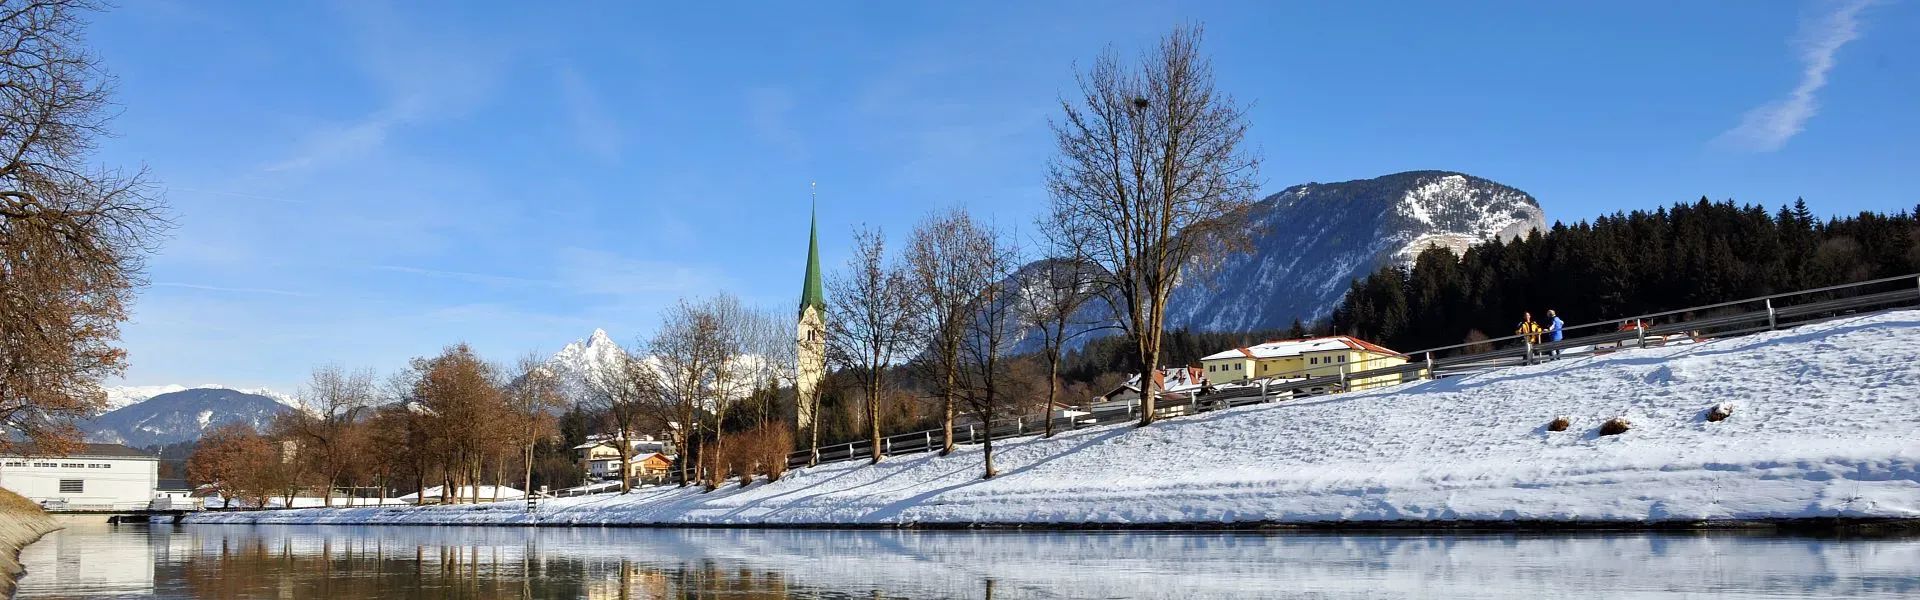 Kirchbichl Ferienregion Hohe Salve Winter